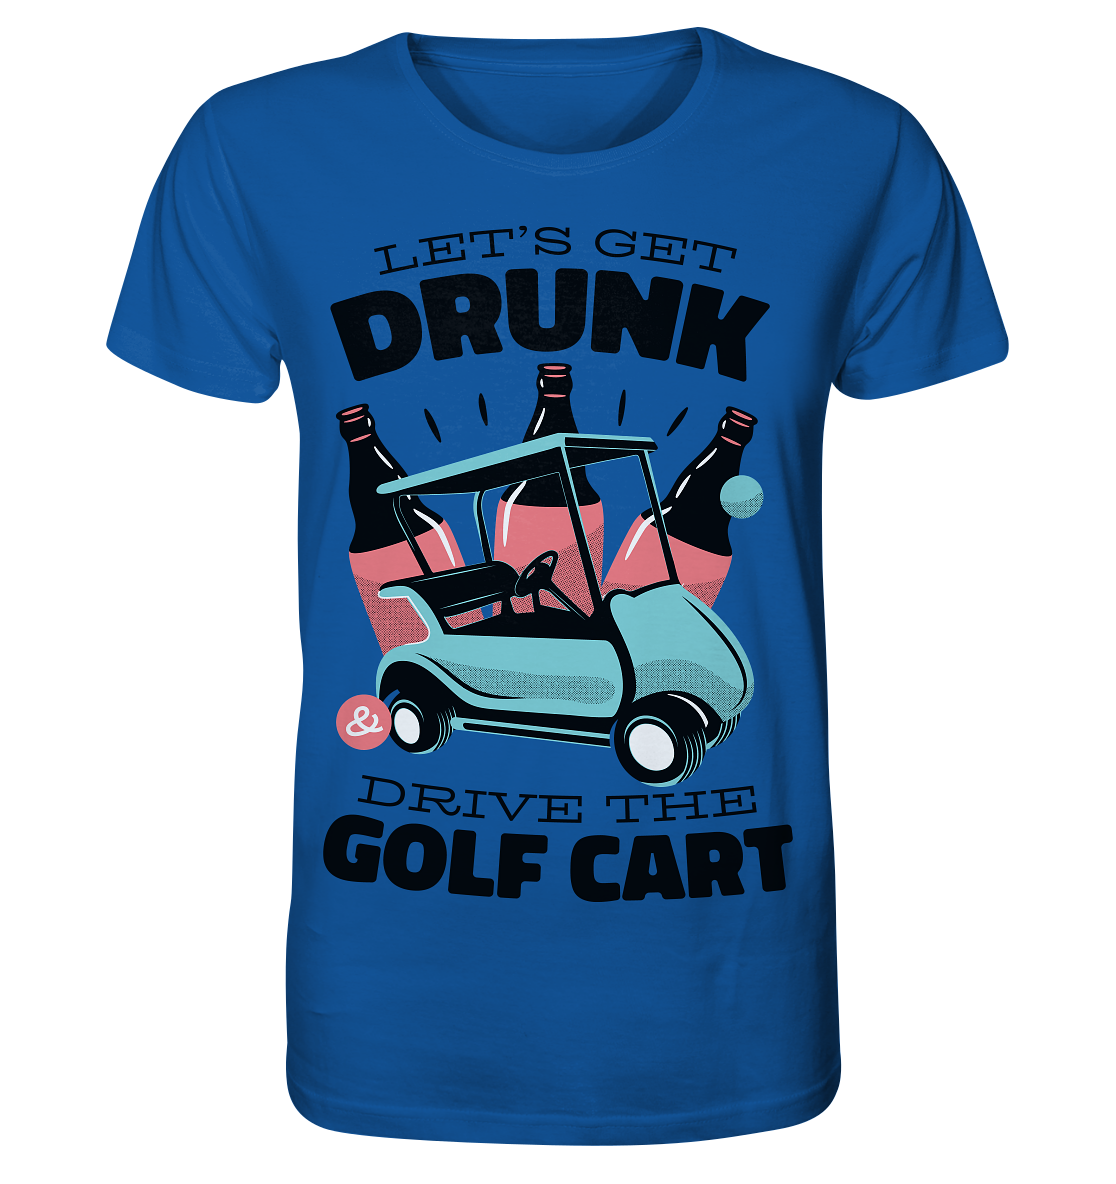 Let's get drunk drive the golf cart, Let's get drunk drive the golf cart - Organic Shirt